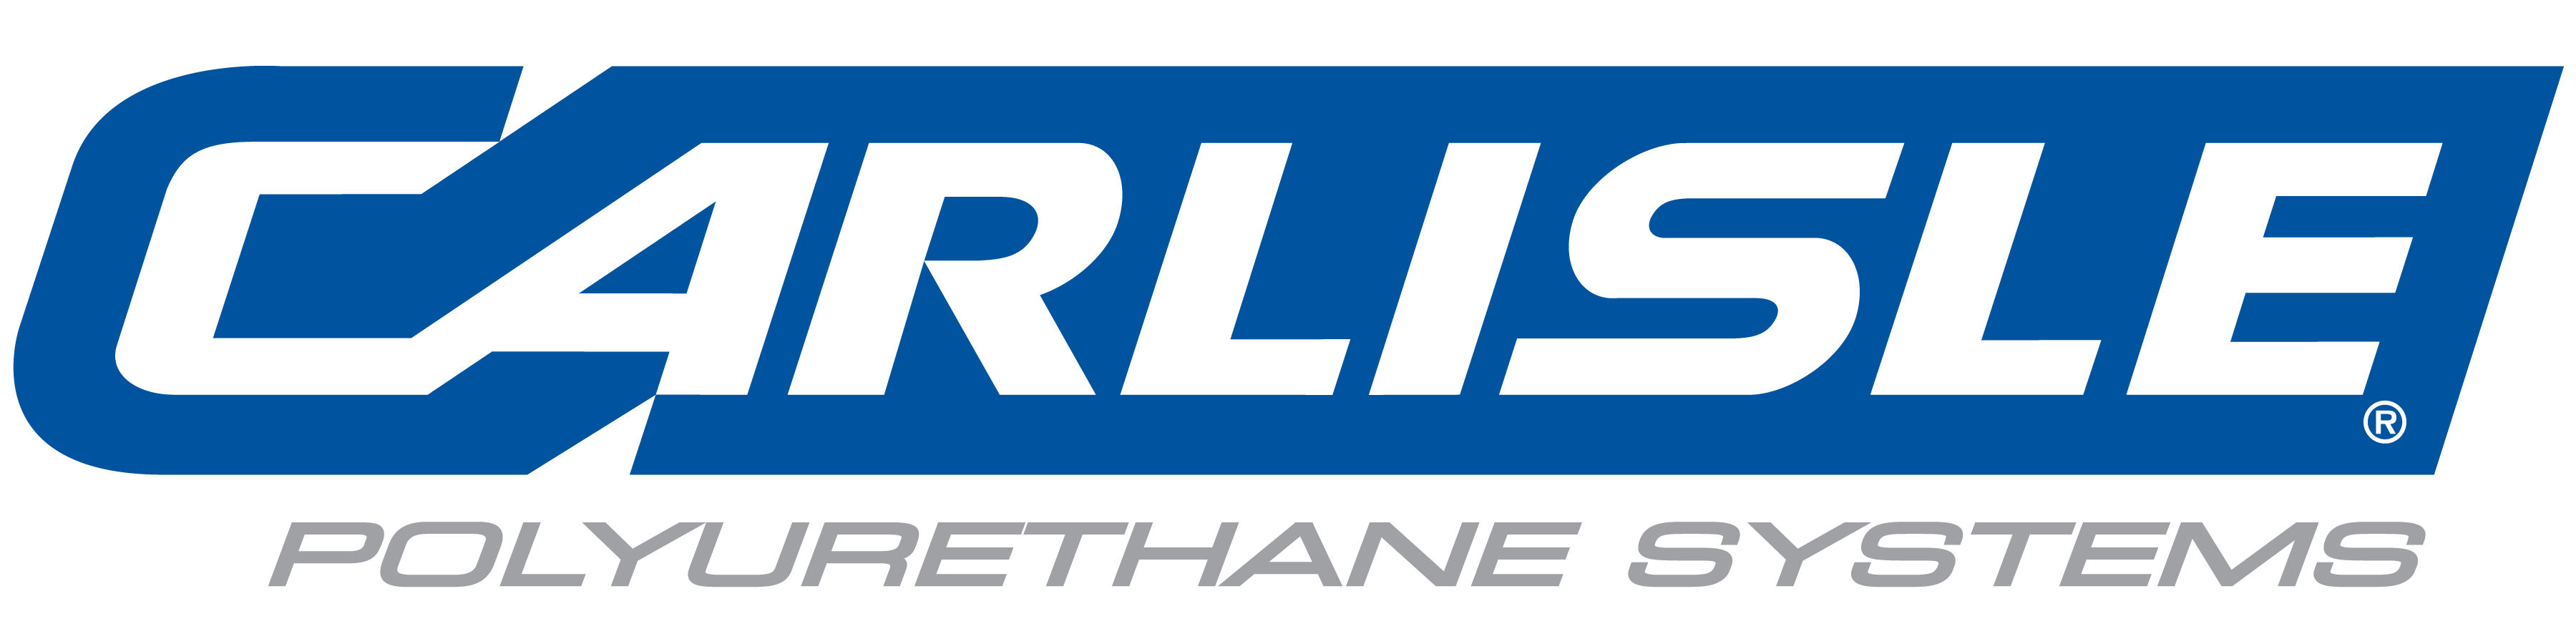 CPS-10964 Carlisle Polyurethane Systems Logo-FINAL.png